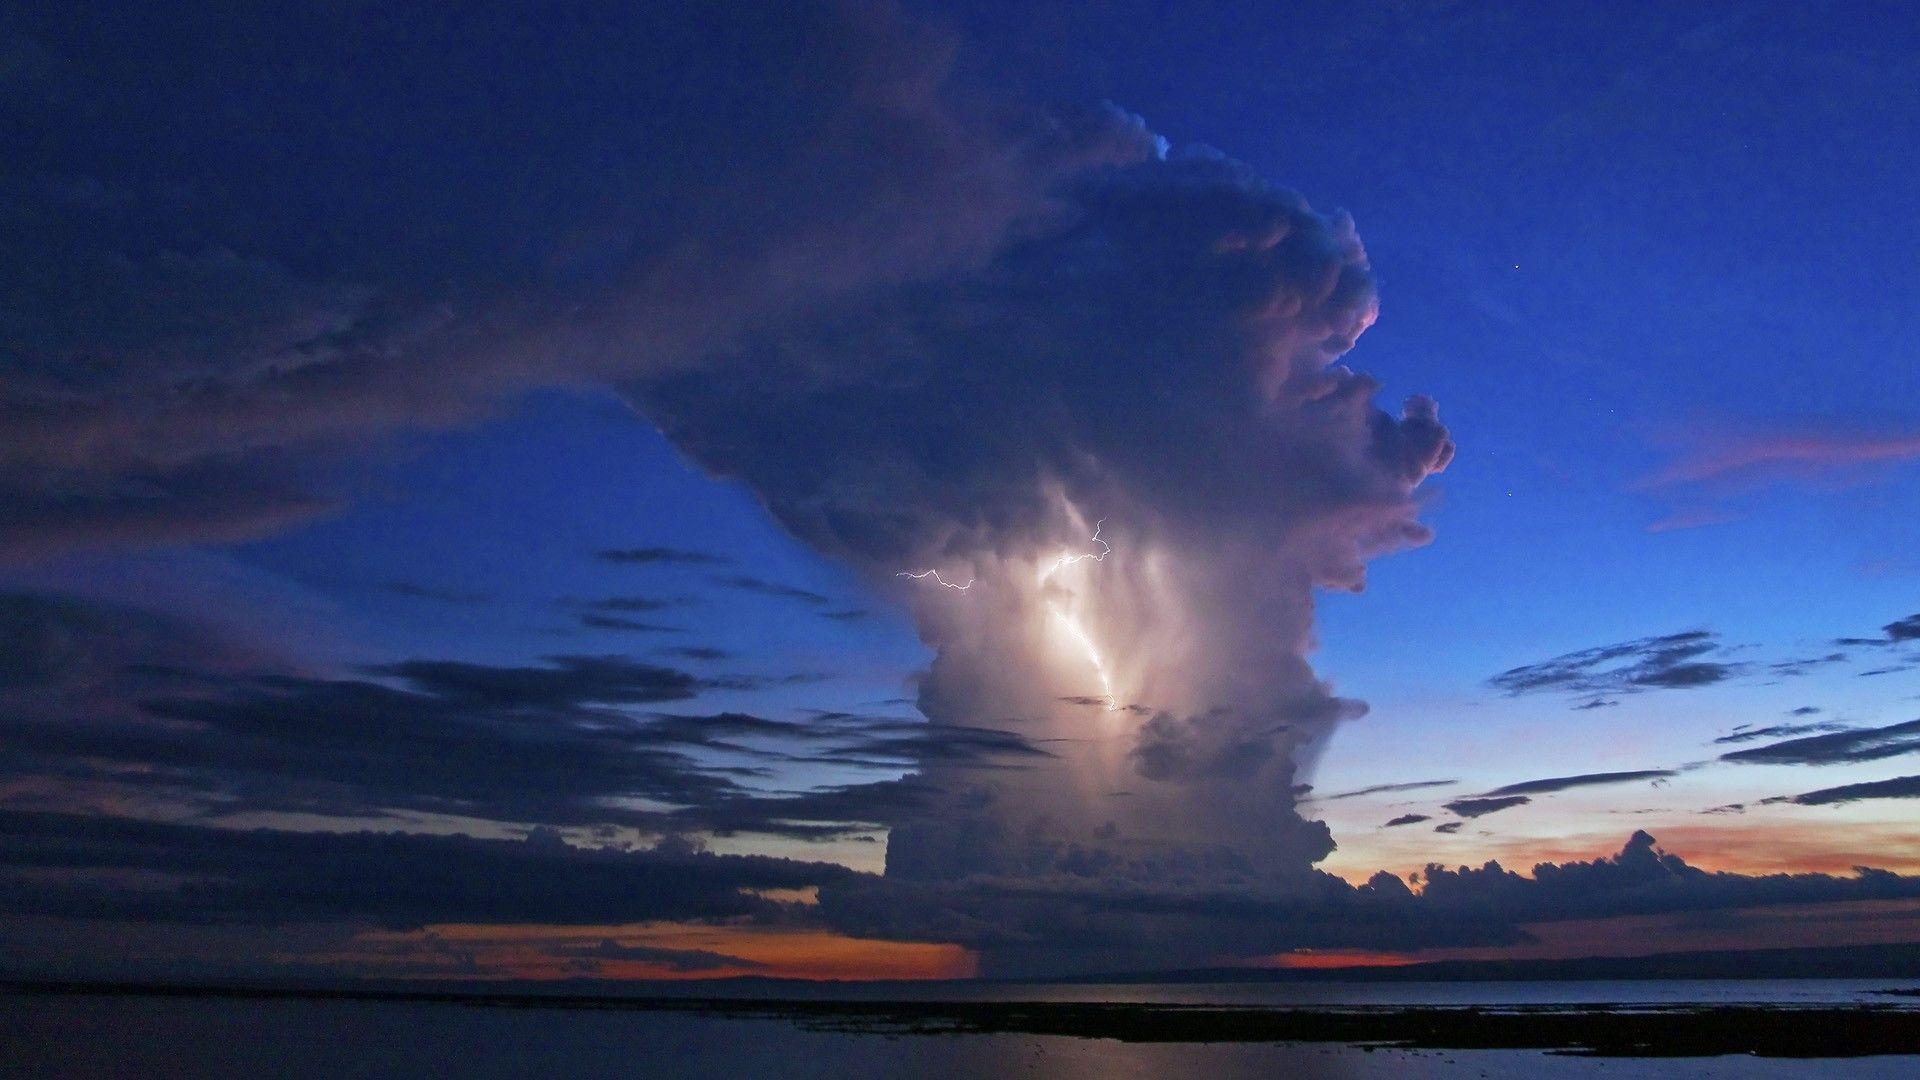 Download Storm Supercell Clouds Lightning wallpaper, Download